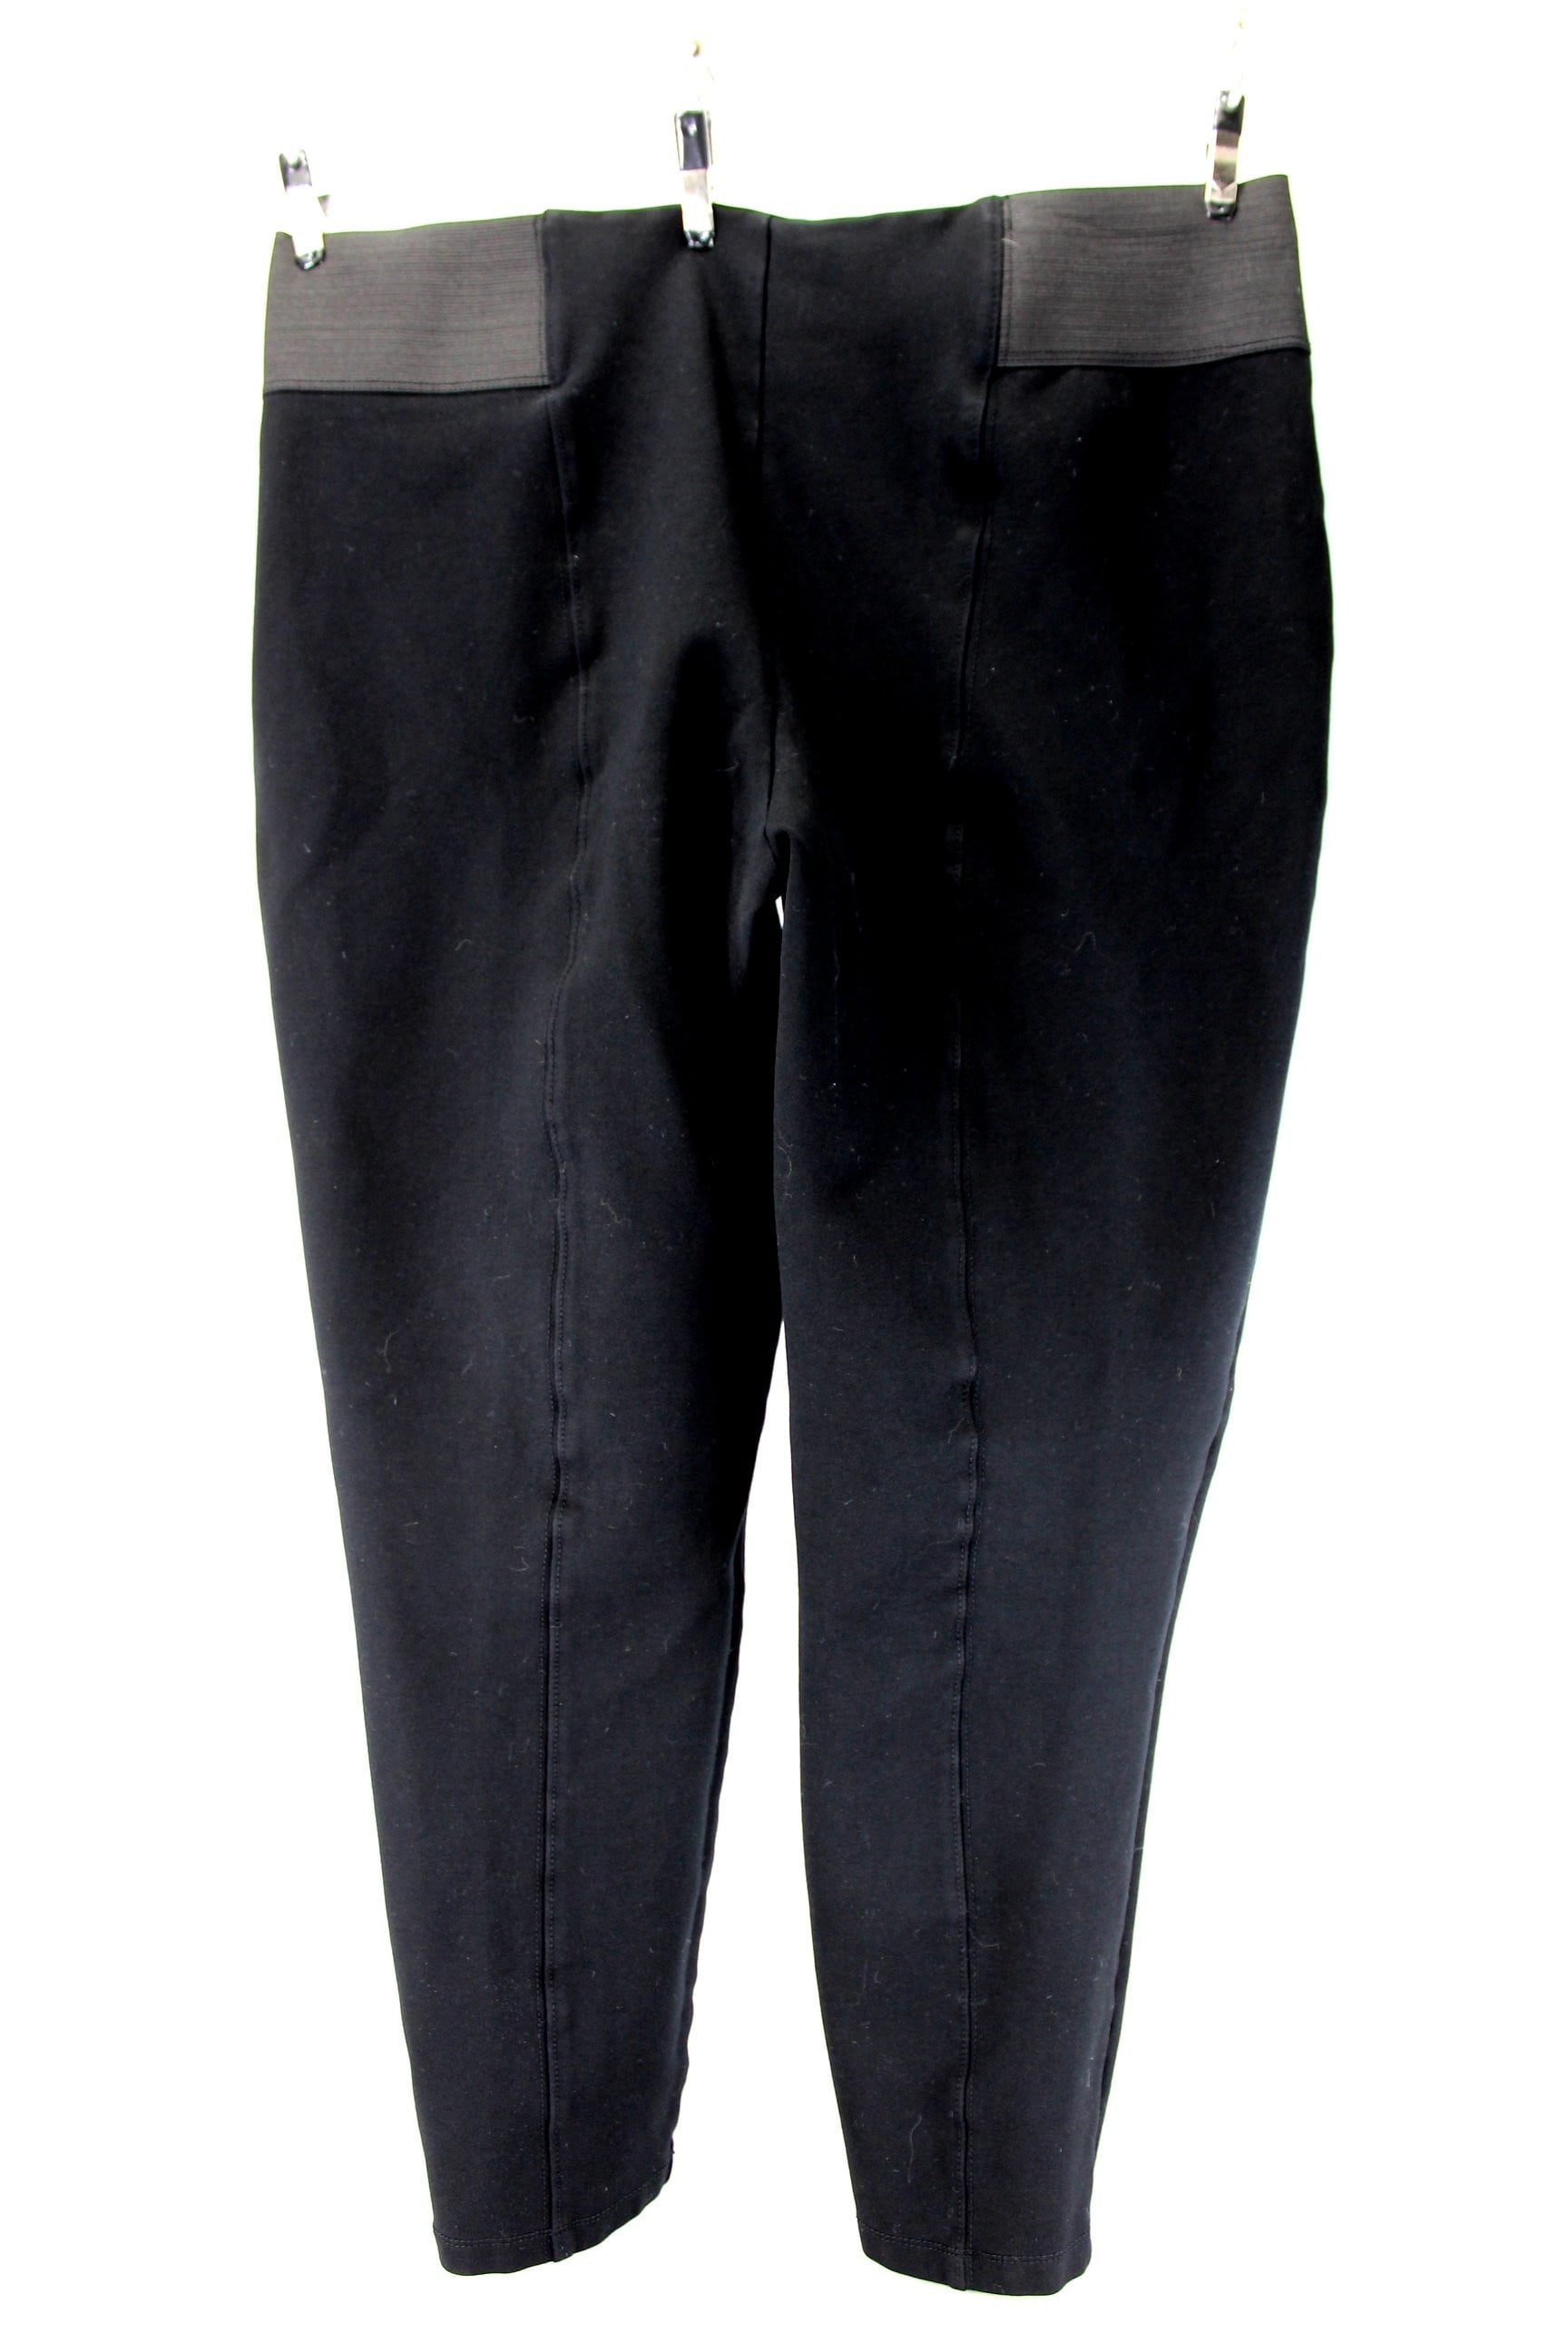 June & Hudson Black Stretch Pants Leggings - Side Elastic - Rayon Nylo